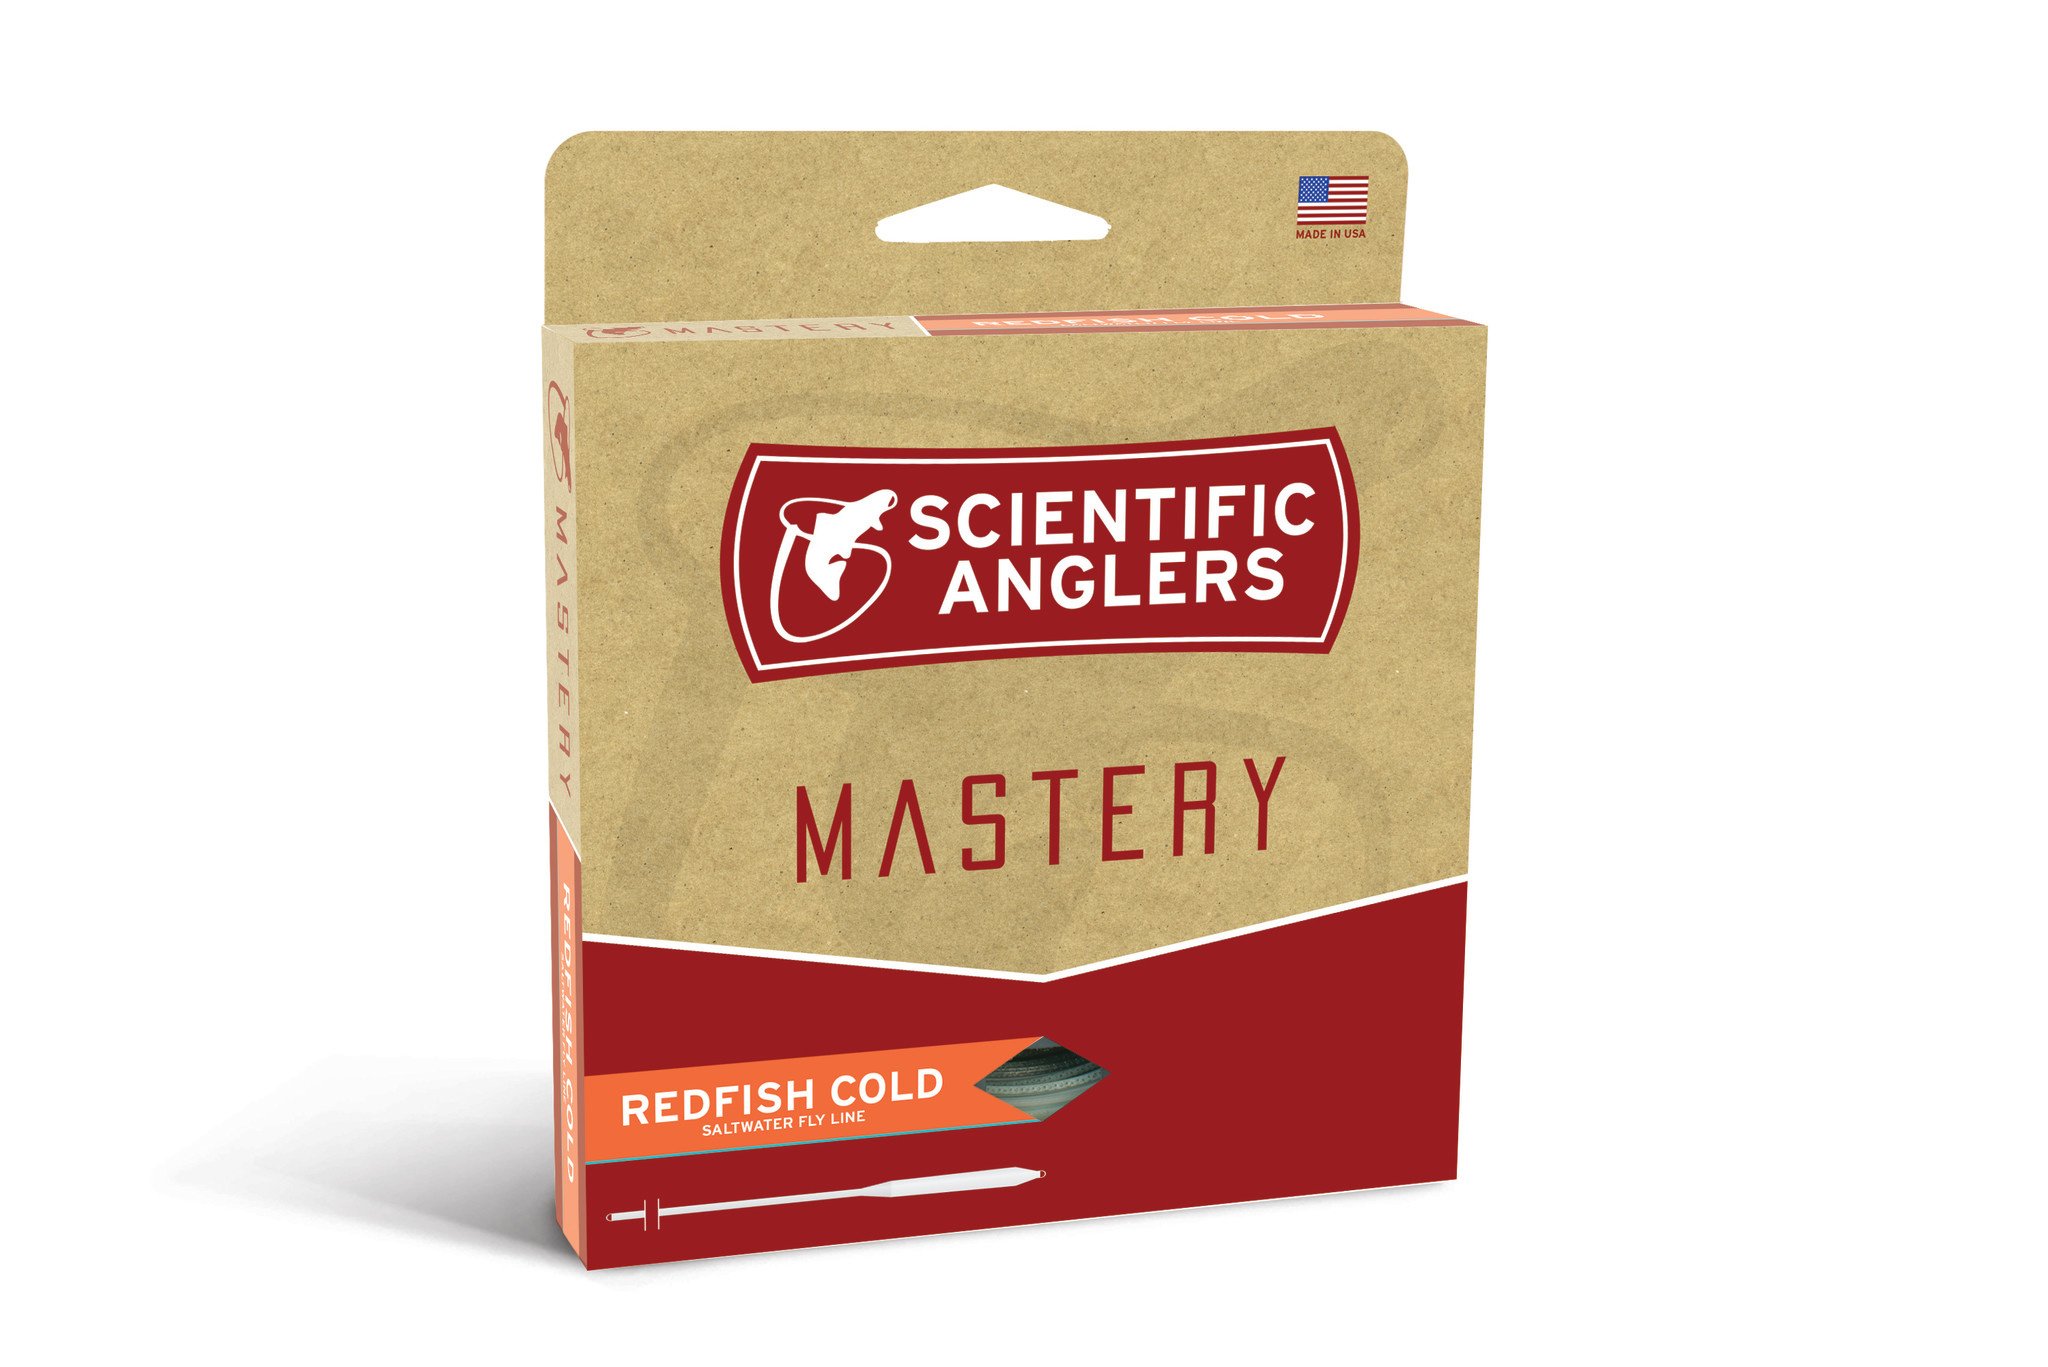 Scientific Anglers Scientific Anglers Mastery Redfish Cold